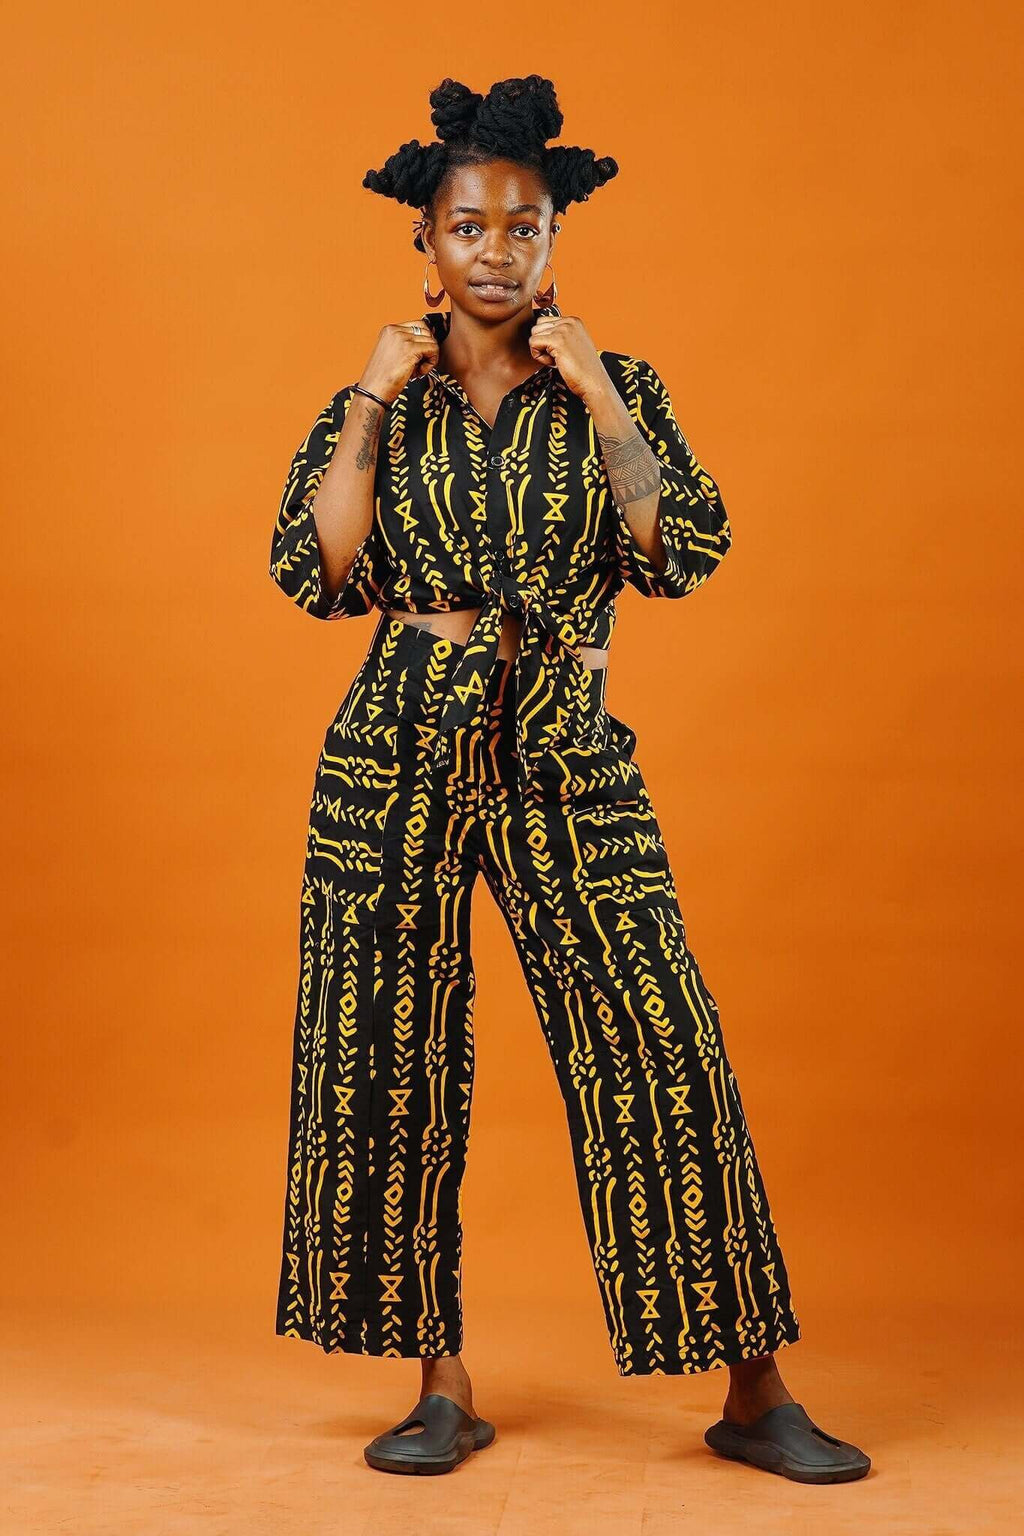 Ashanti Empress Shoot / Model Langa Smith / Uploaded 4th August 2020 @  07:02 PM